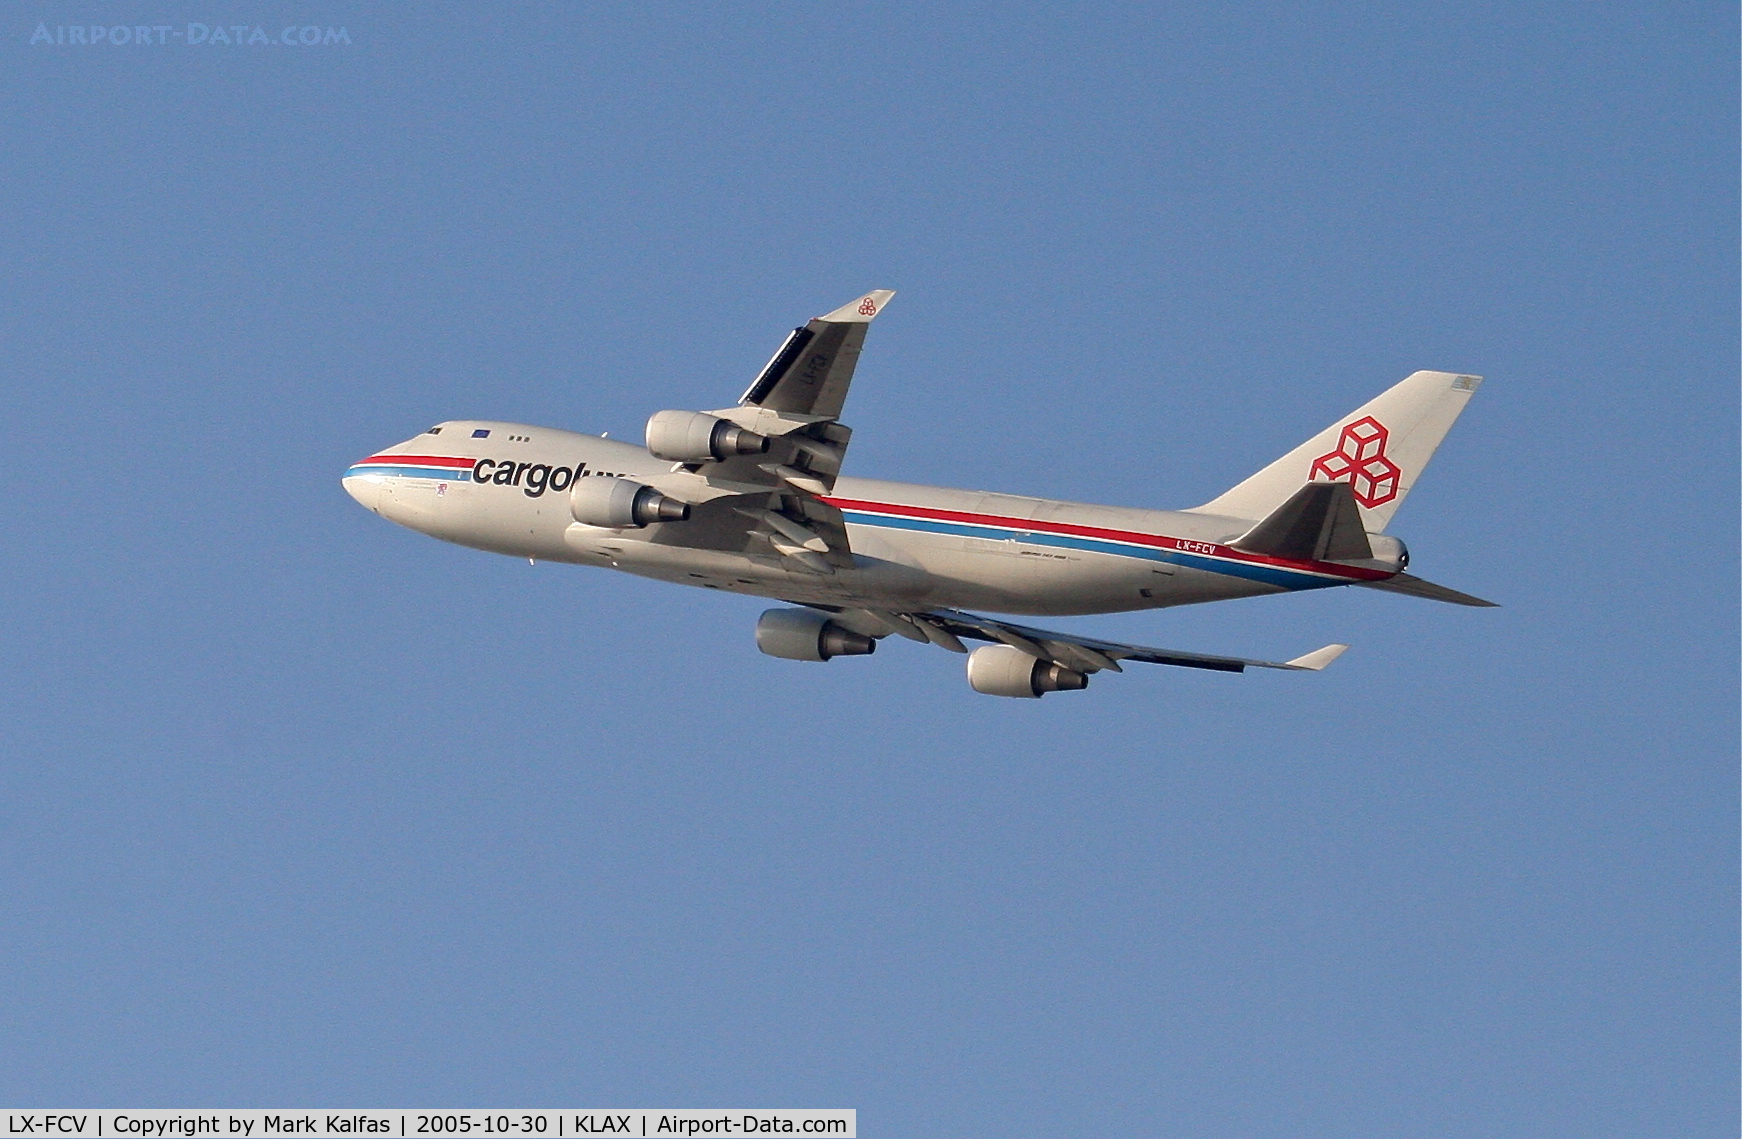 LX-FCV, 1993 Boeing 747-4R7F C/N 25866, CargoLux Boeing 747-4R7F, LX-FCV departing 25L KLAX.